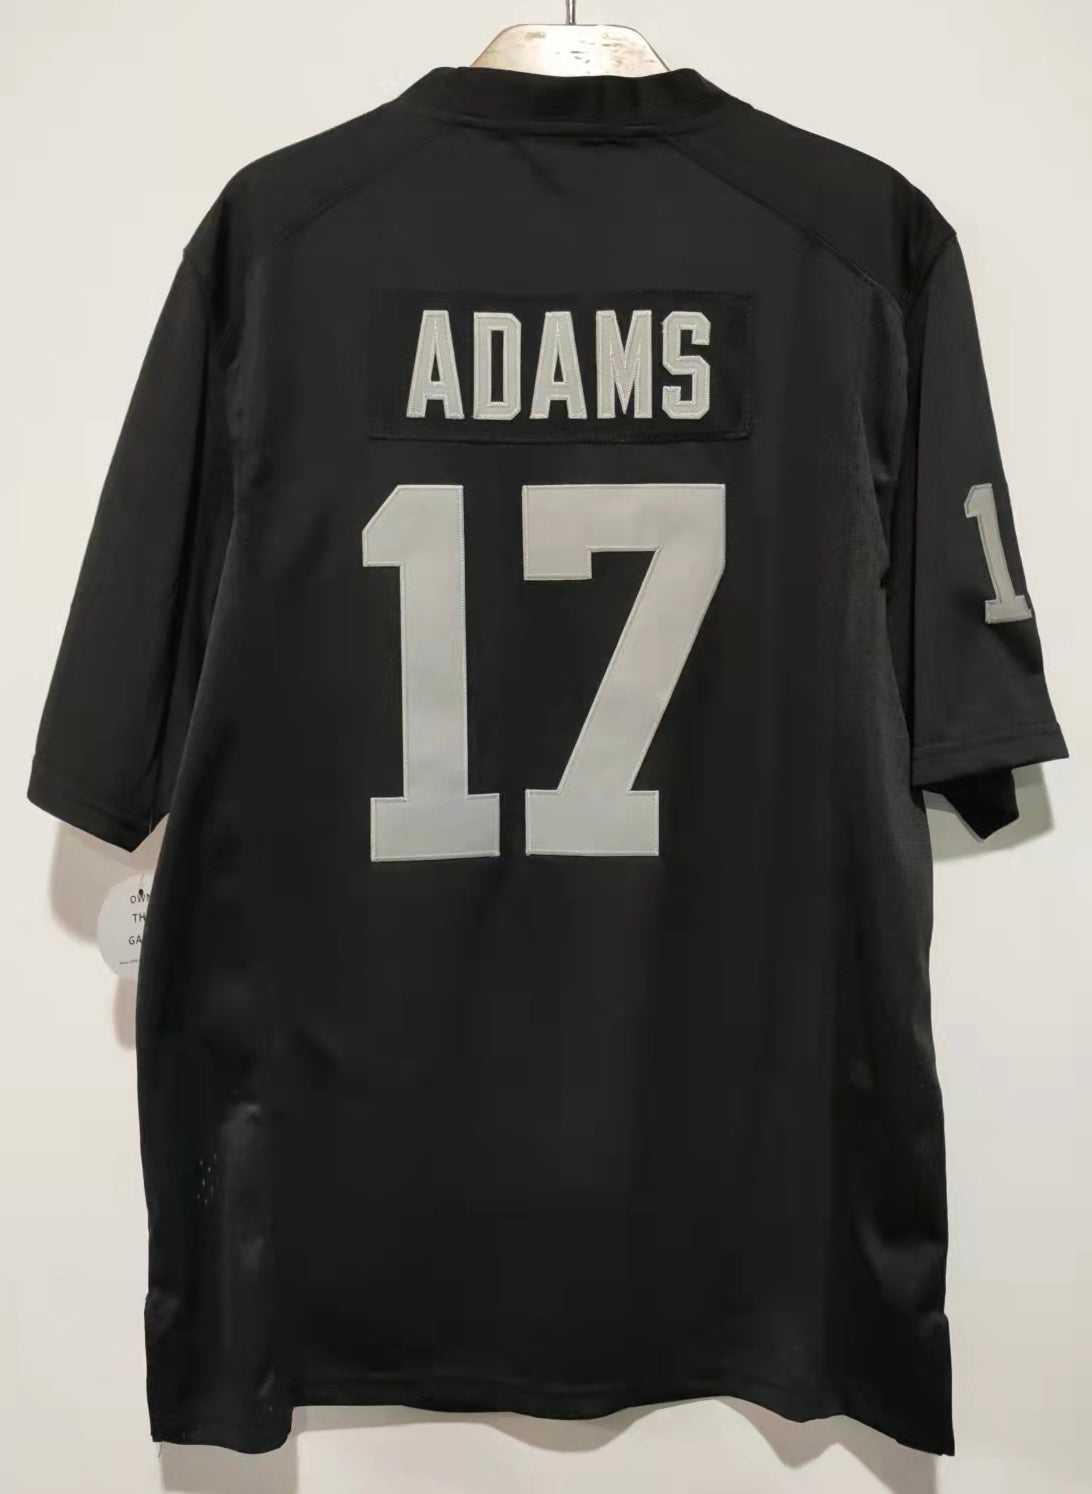 Davante Adams Las Vegas Raiders jersey: How to buy home, away gear